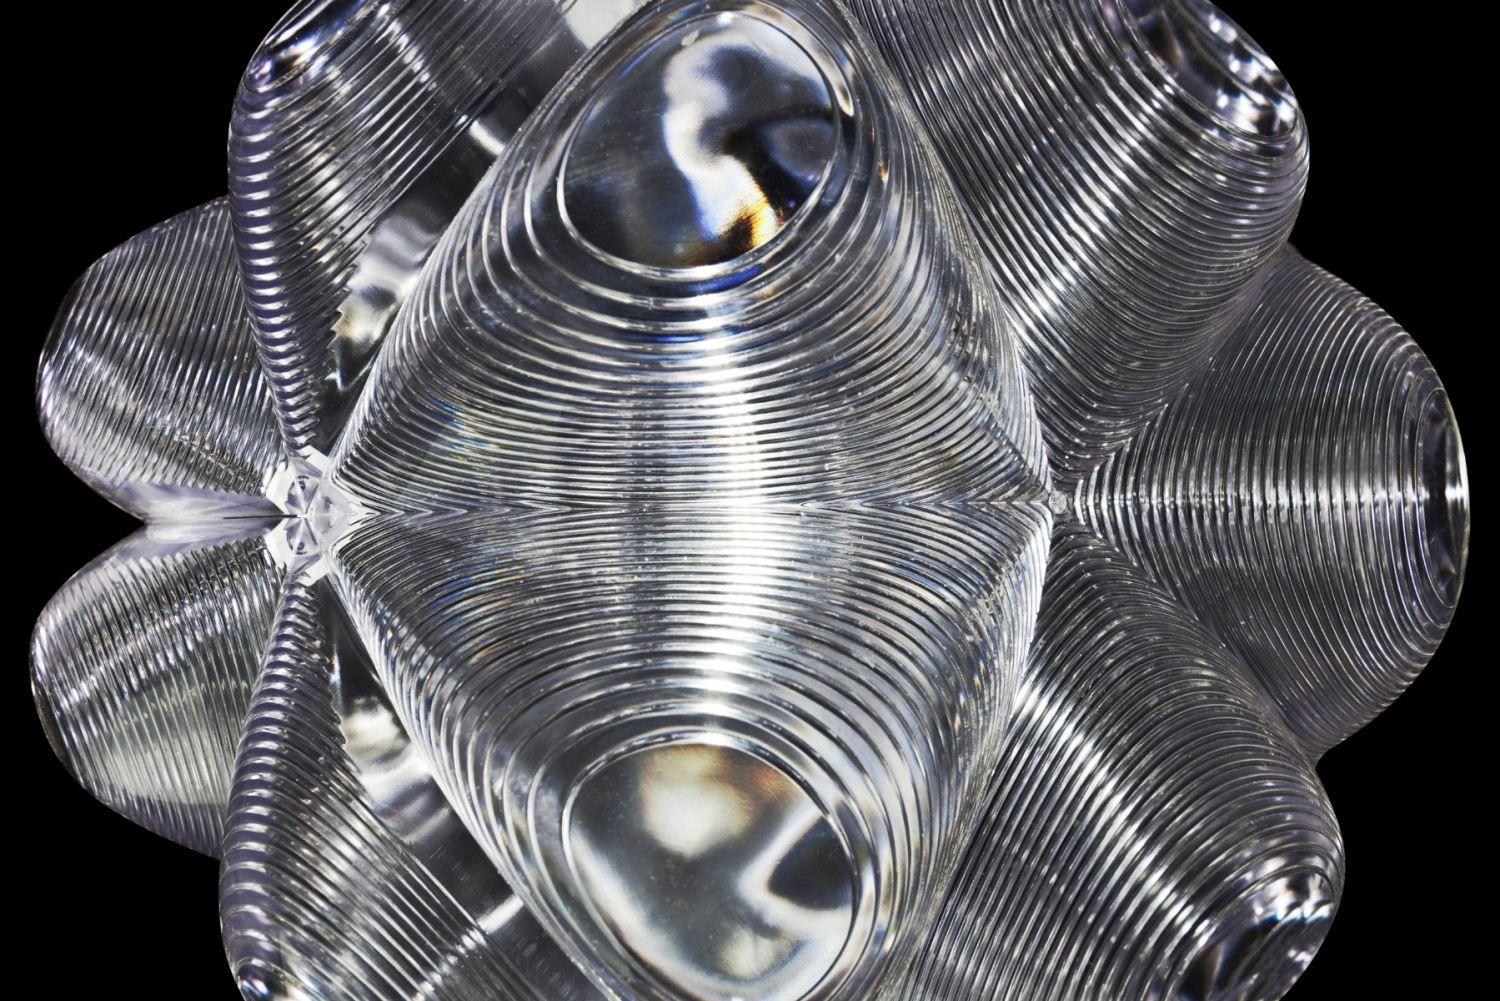 Unknown Tom Dixon Lens Pendant Fixture, Spherical Ceiling Light, Globe Chandelier, 2019